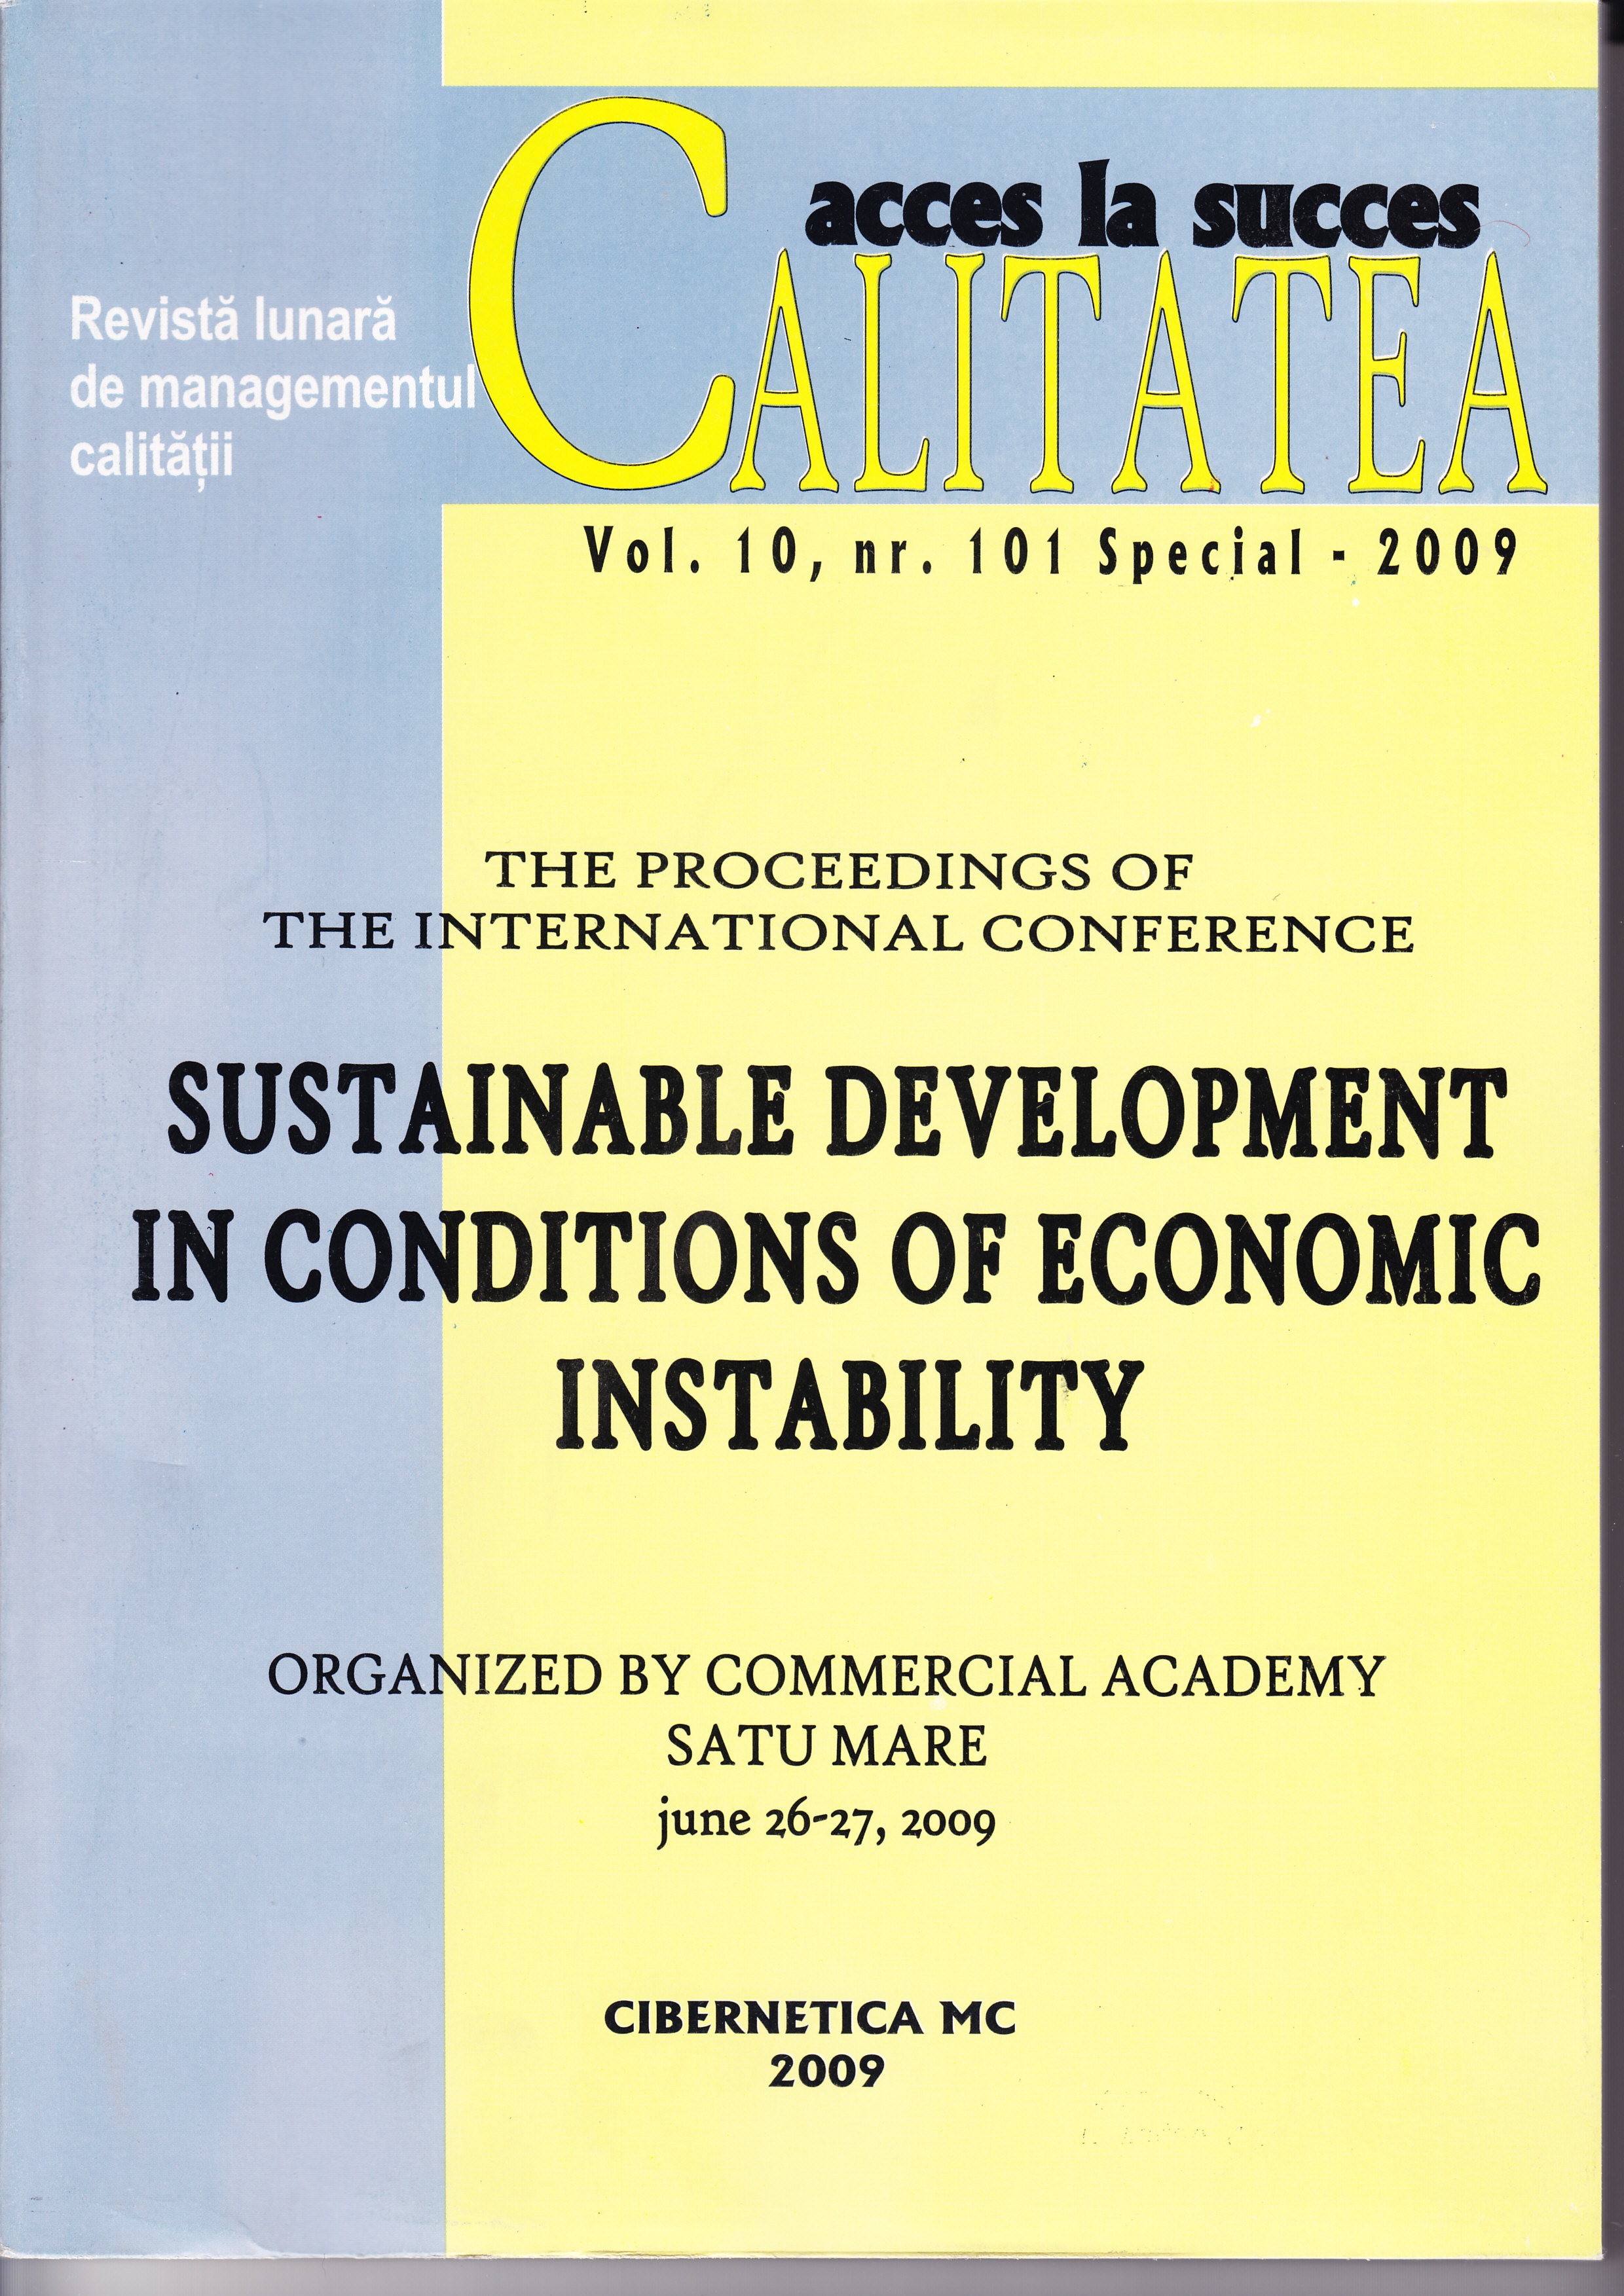 Detalii: Sustenable Development in Conditions of Economic Instability,  June 26-27 , Organizat de Academia Comerciala din Satu Mare 